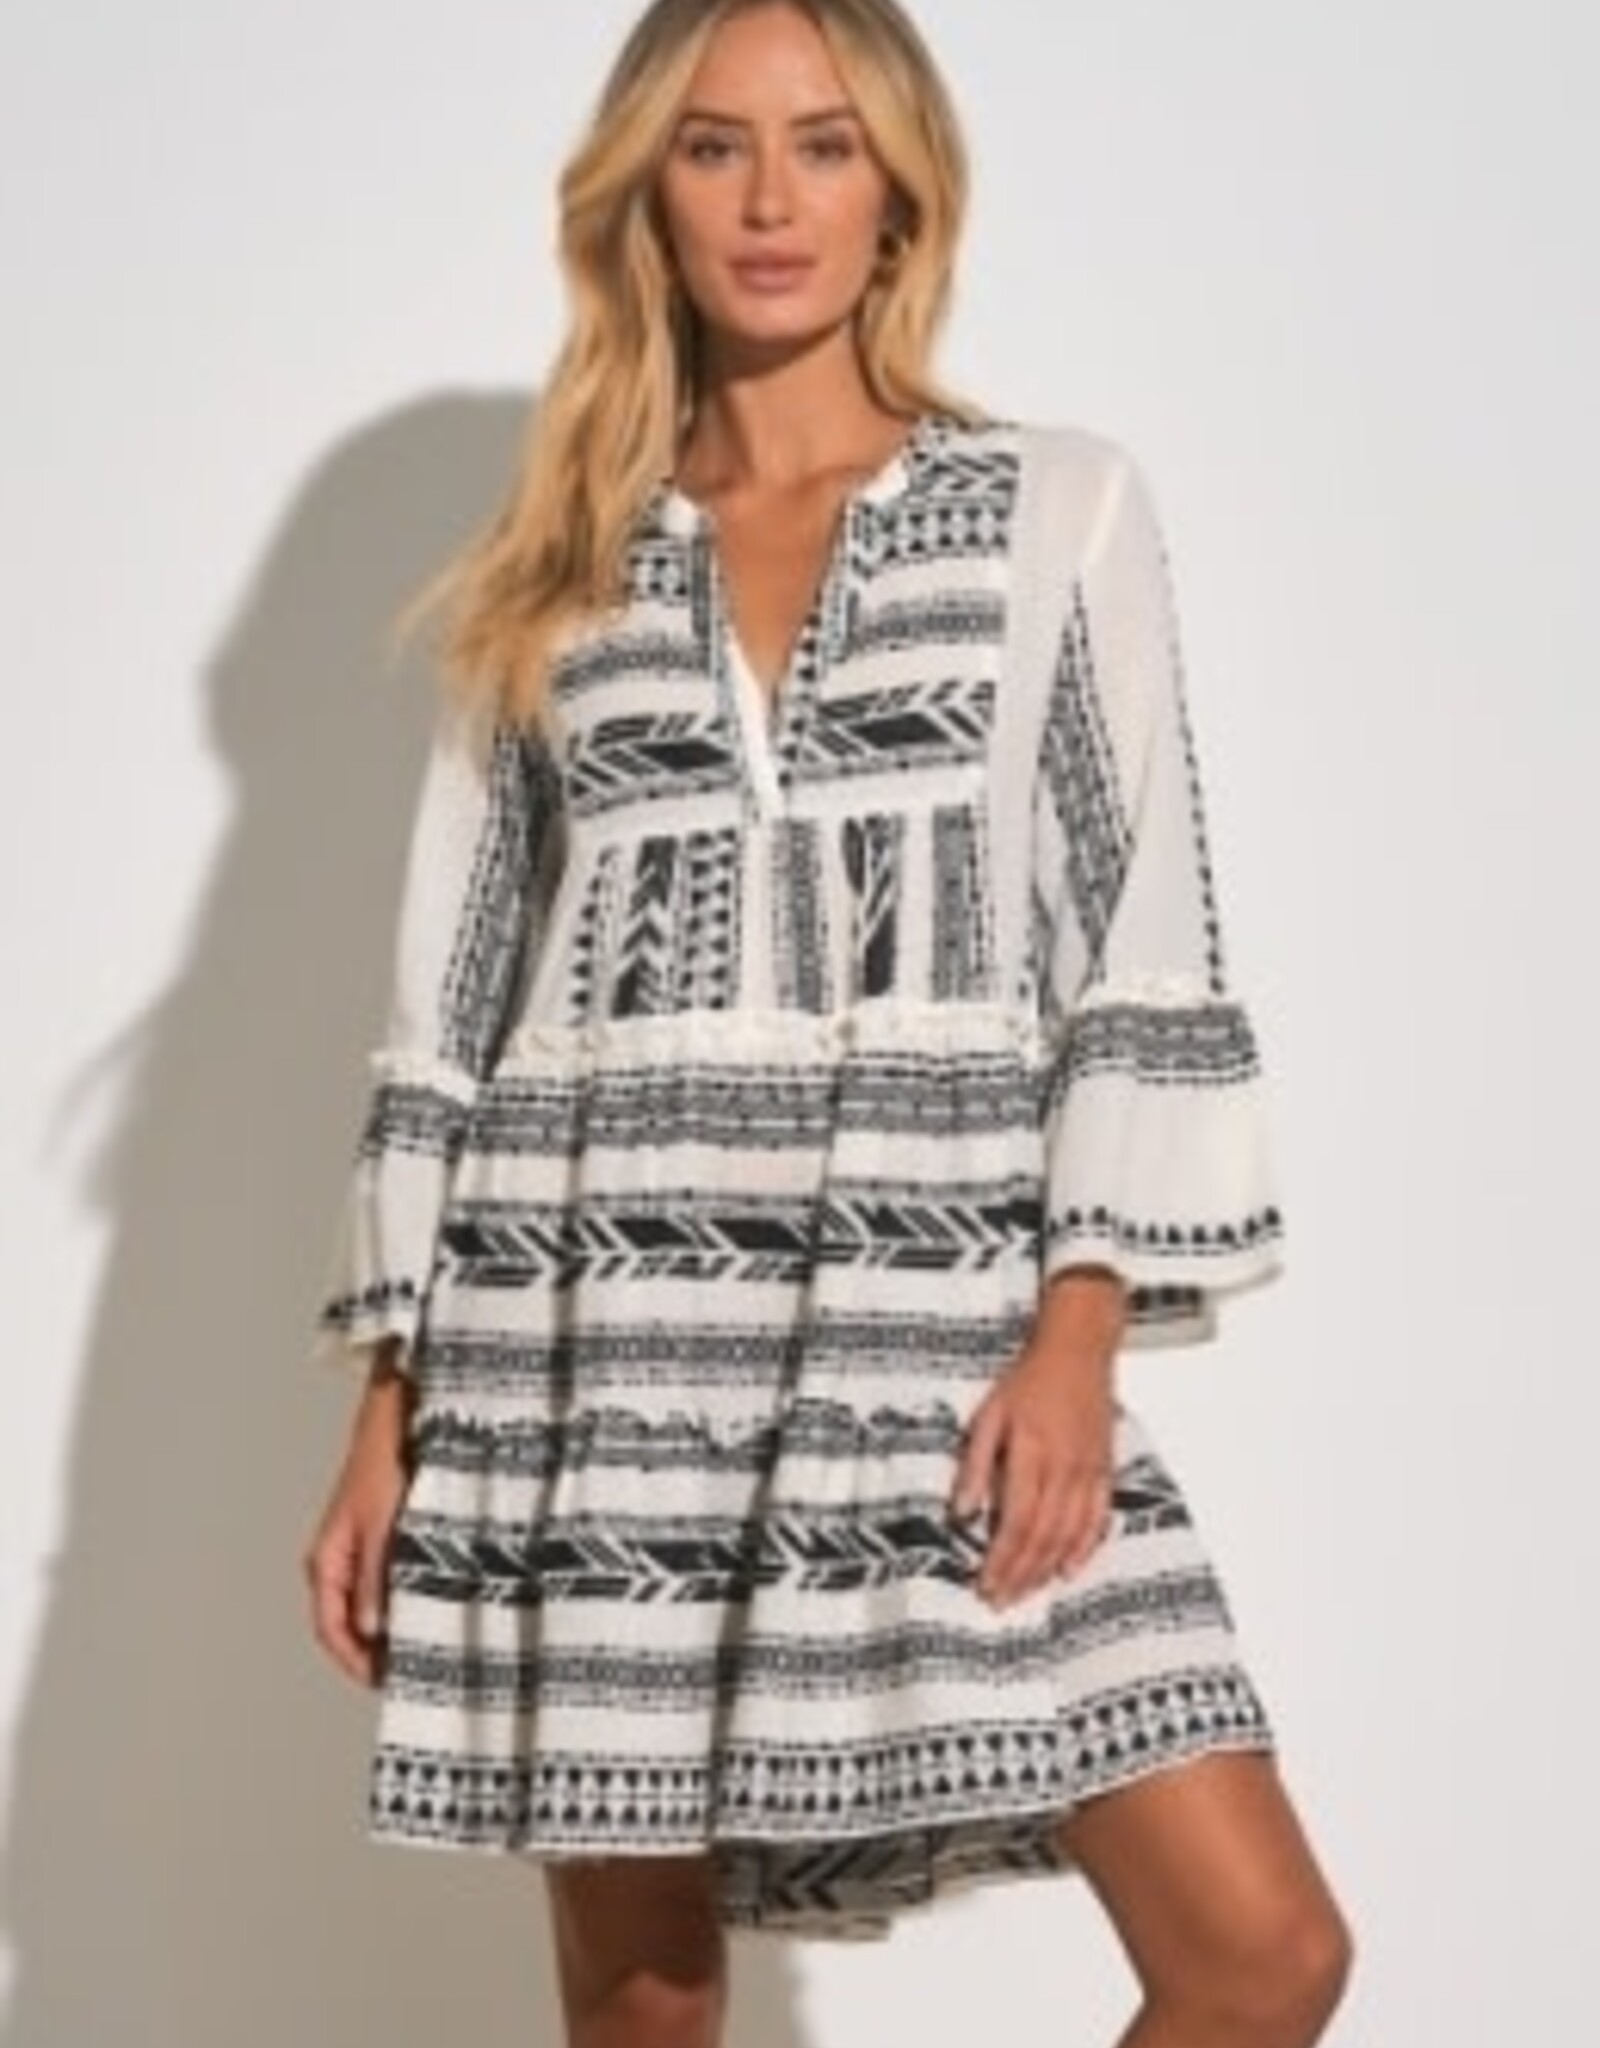 Elan International A-Line Aztec-Patterned Long Sleeve Dress